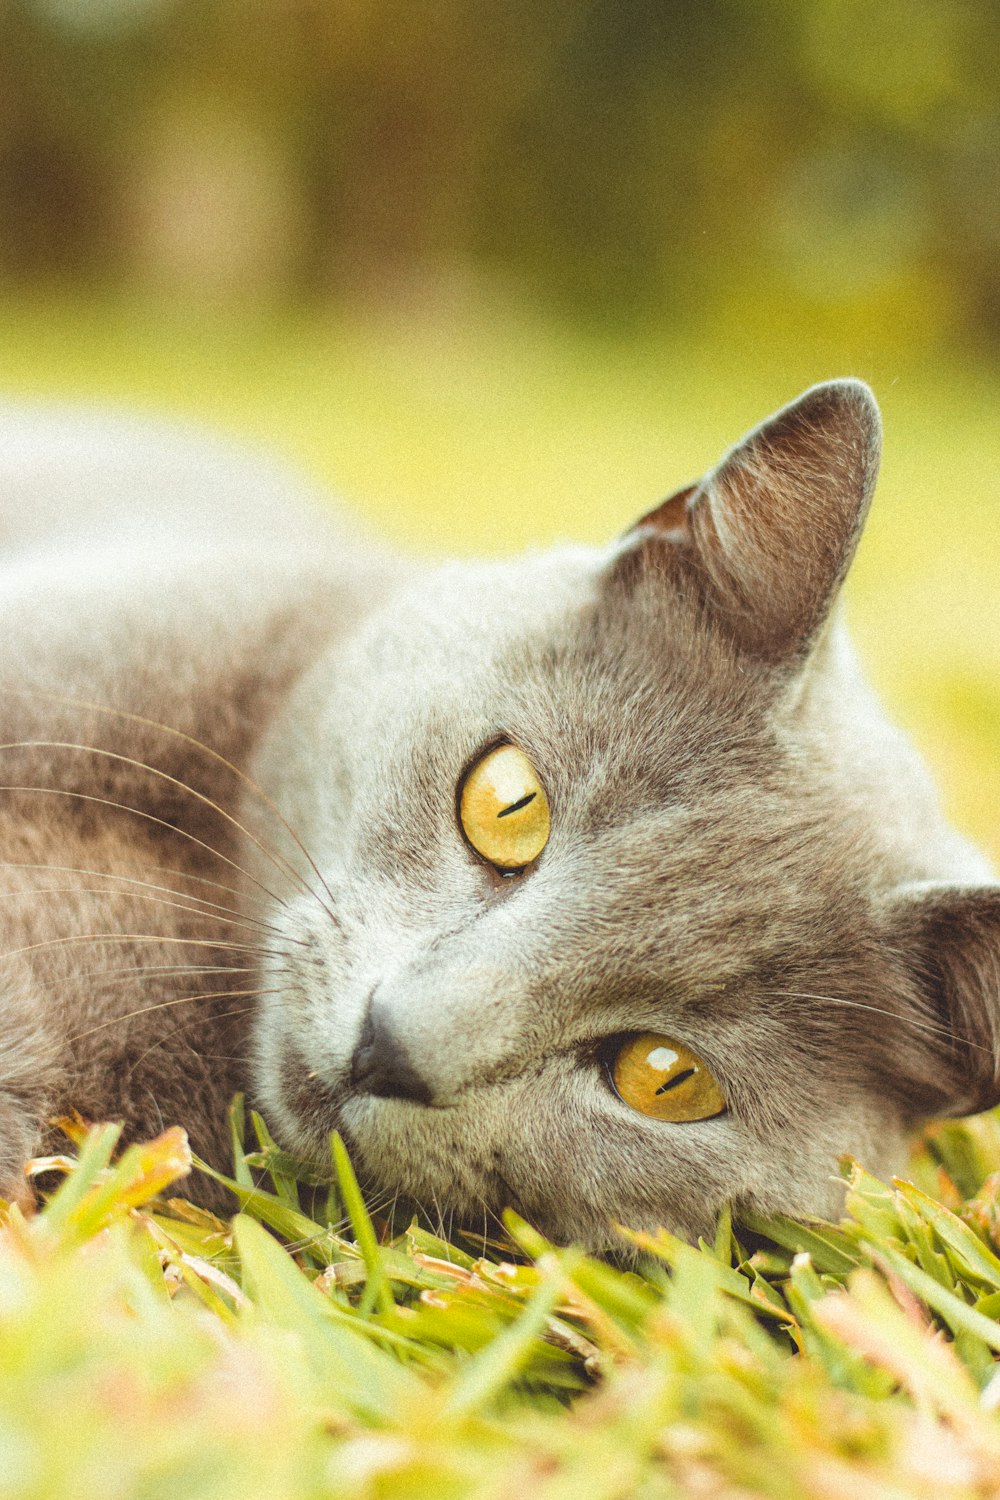 a cat lying on grass